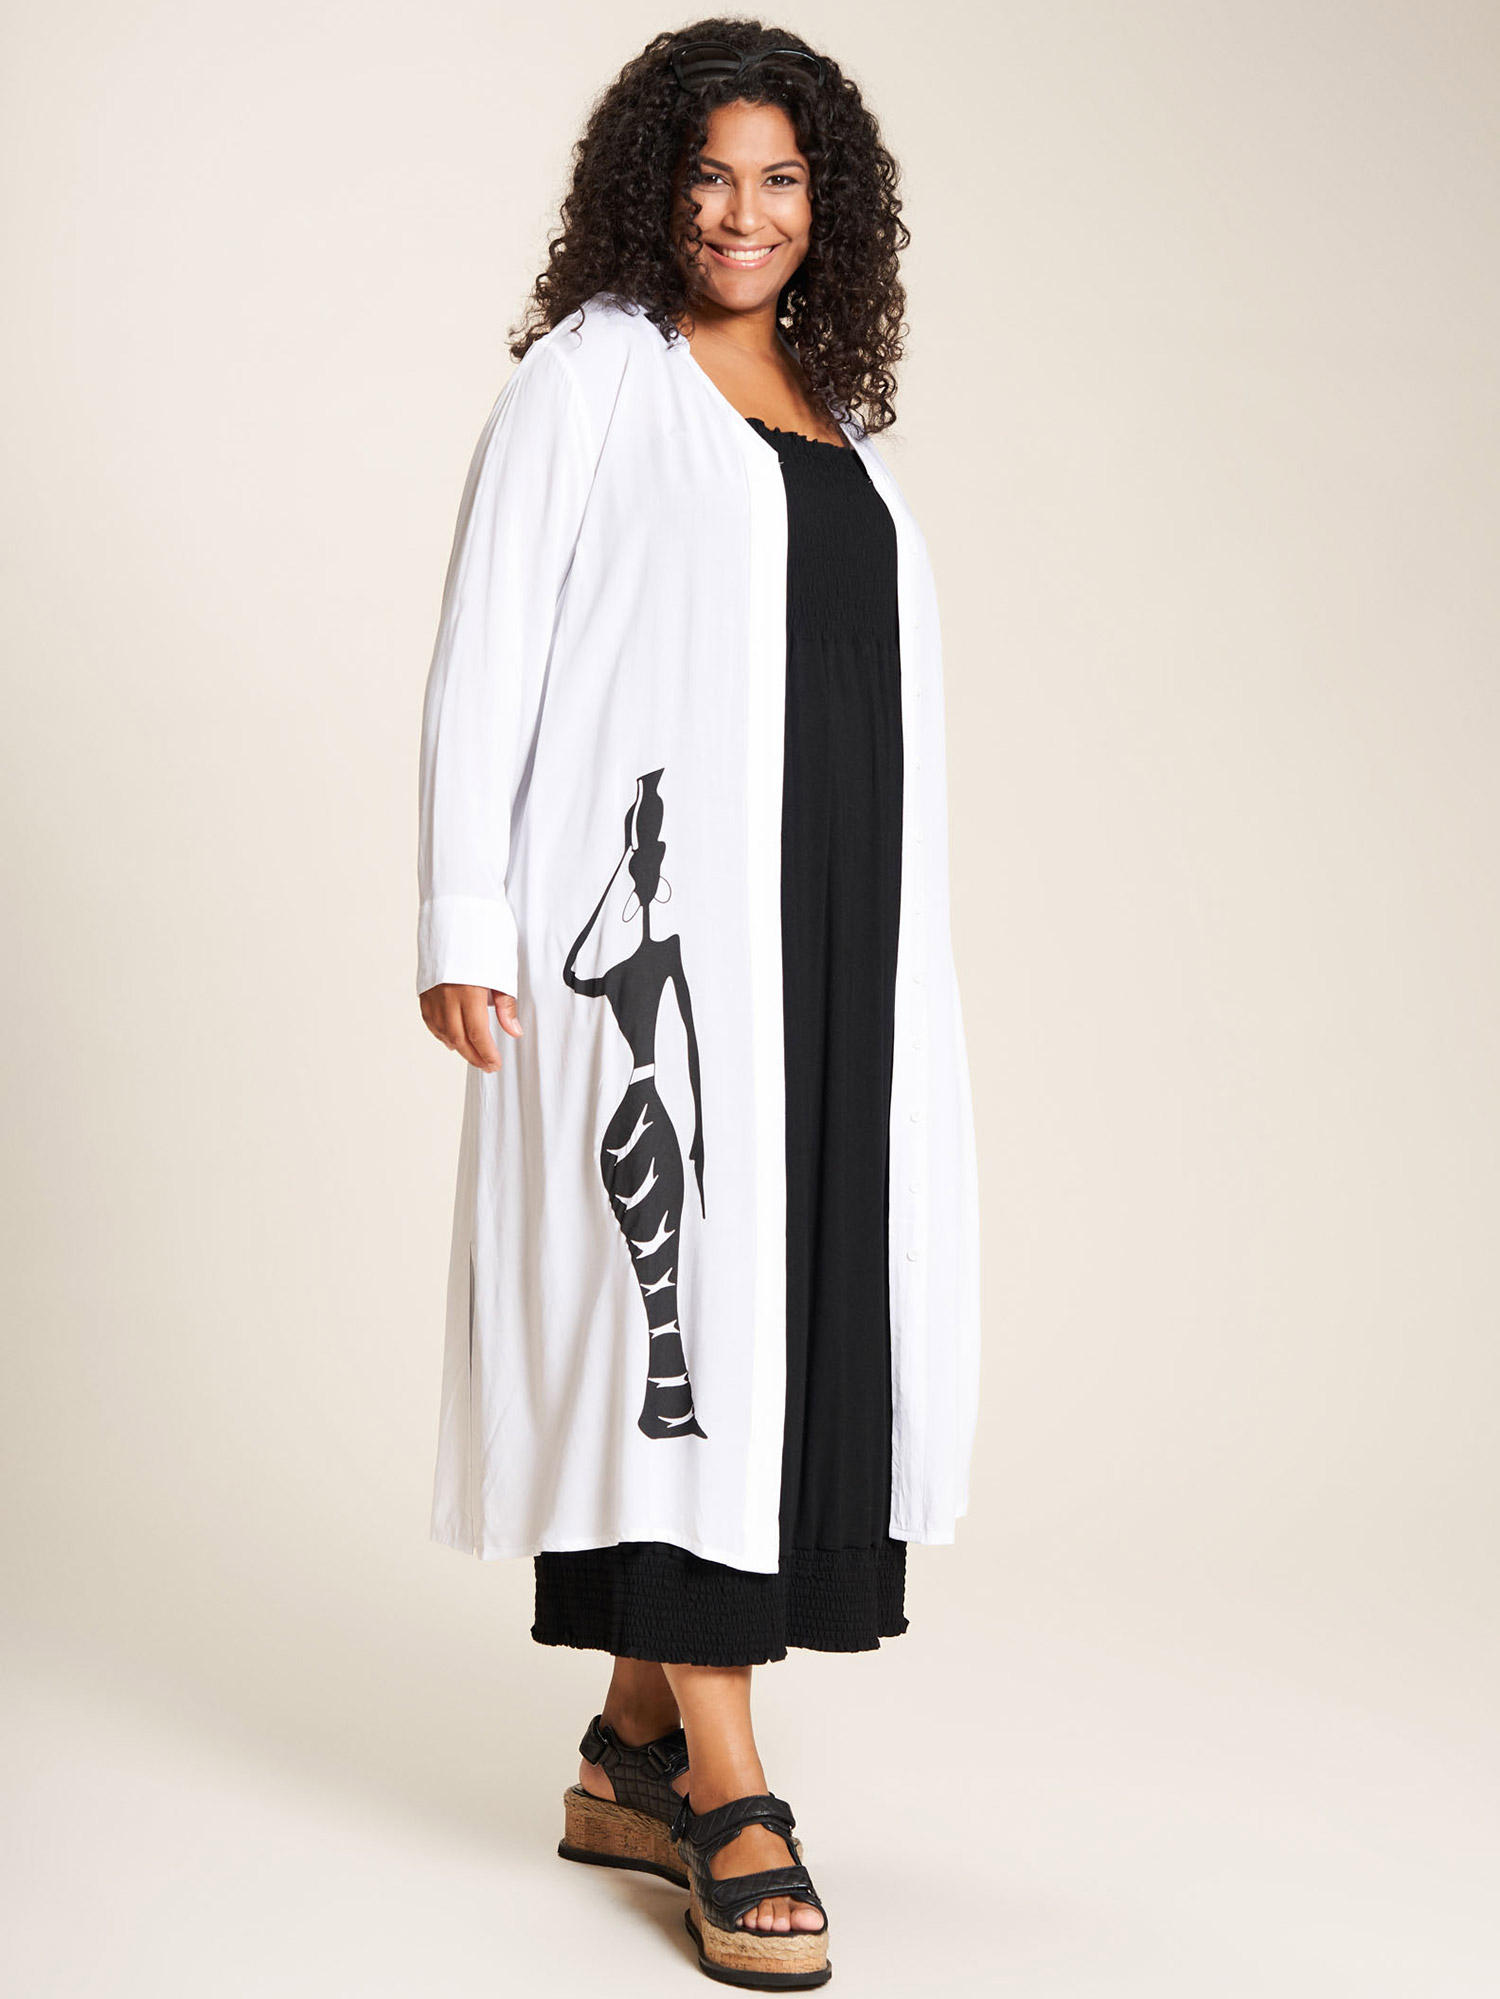 Jean - Flot hvid viskose skjorte kjole med sort tryk fra Studio